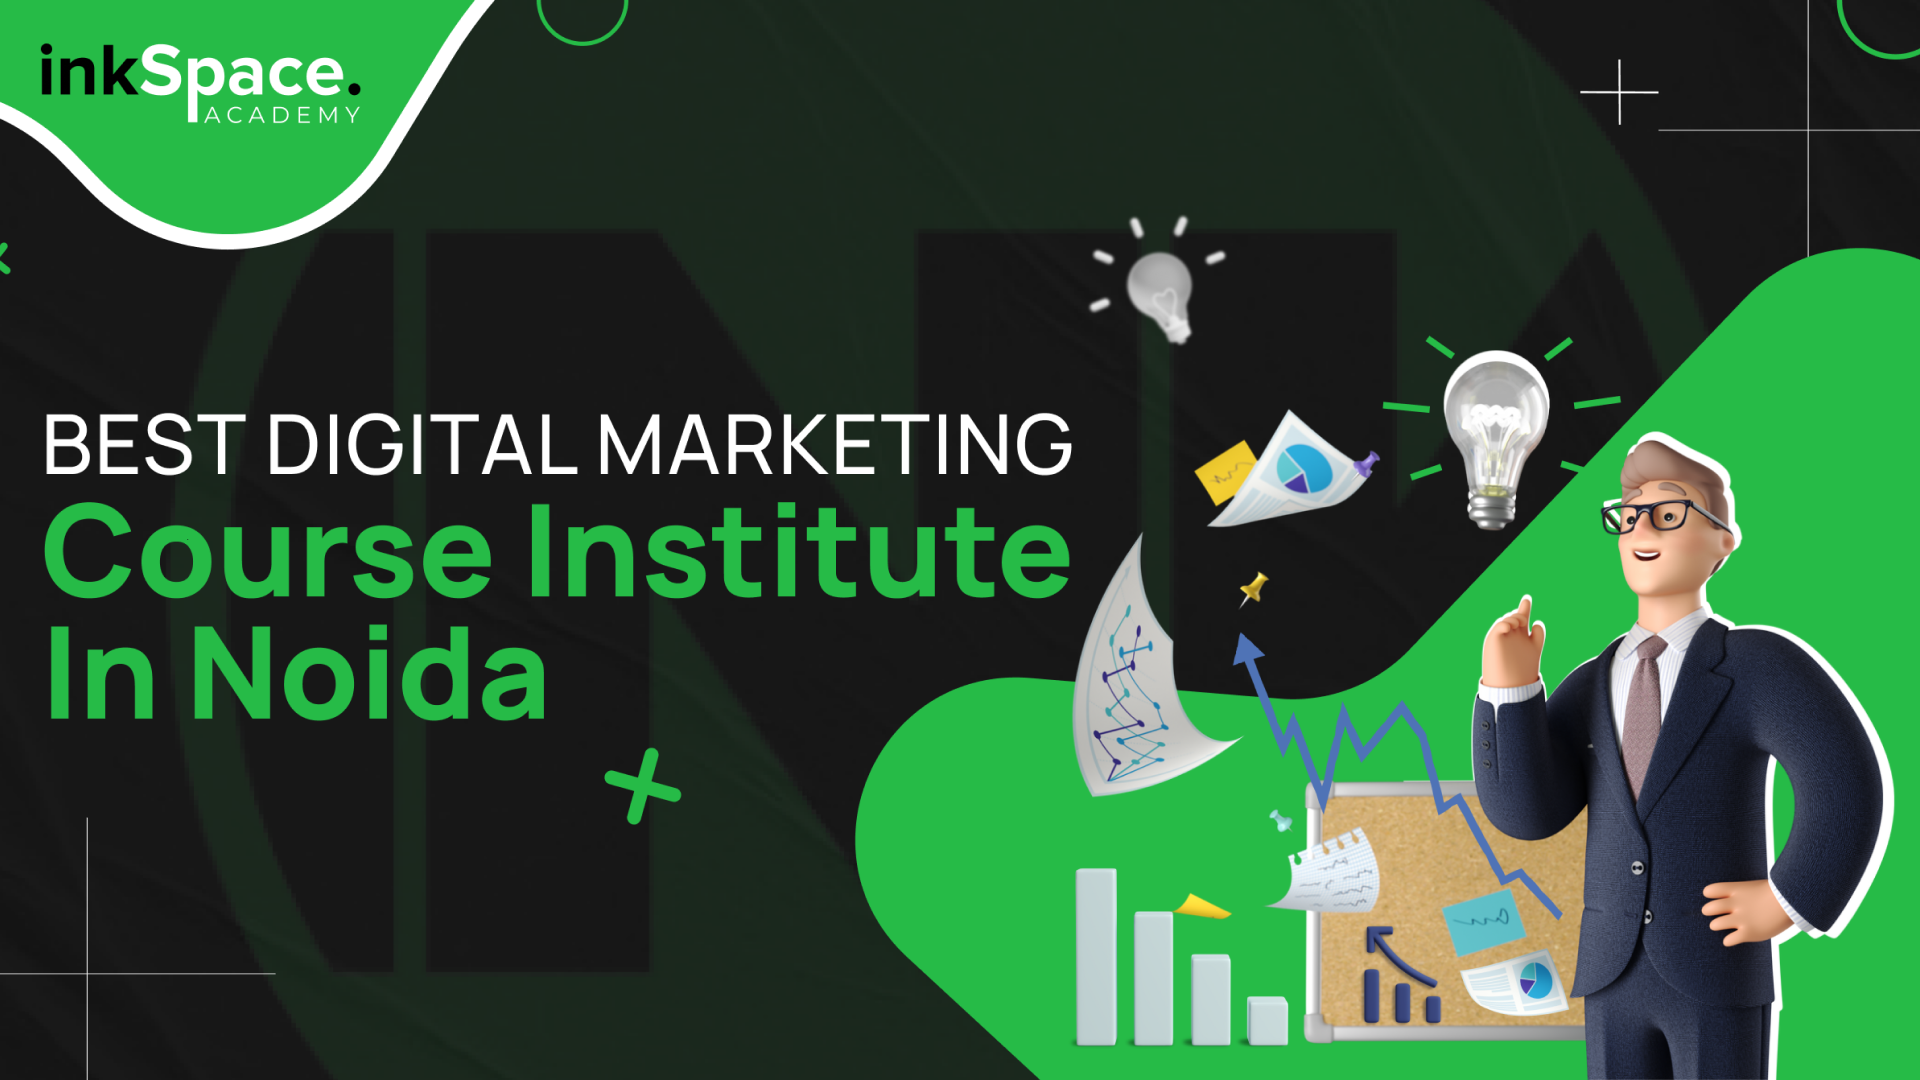 Best Digital Marketing Course Institute in Noida - Inkspace Academy